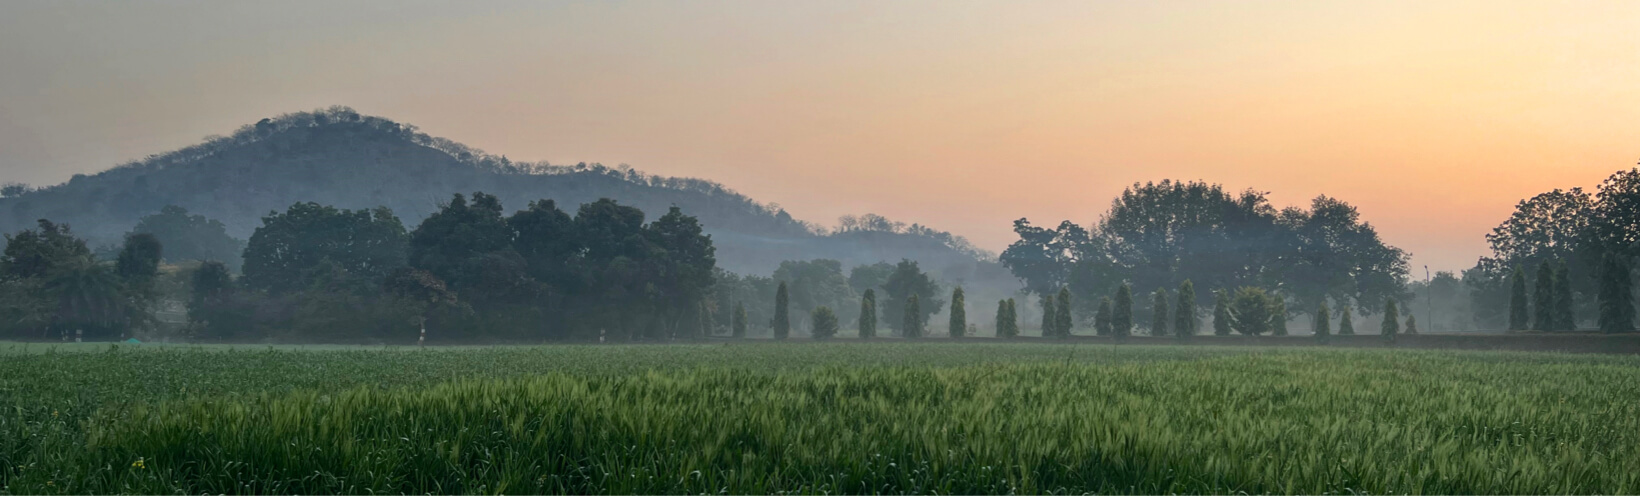 khajuraho fields sunset banner - Himalayan Institute